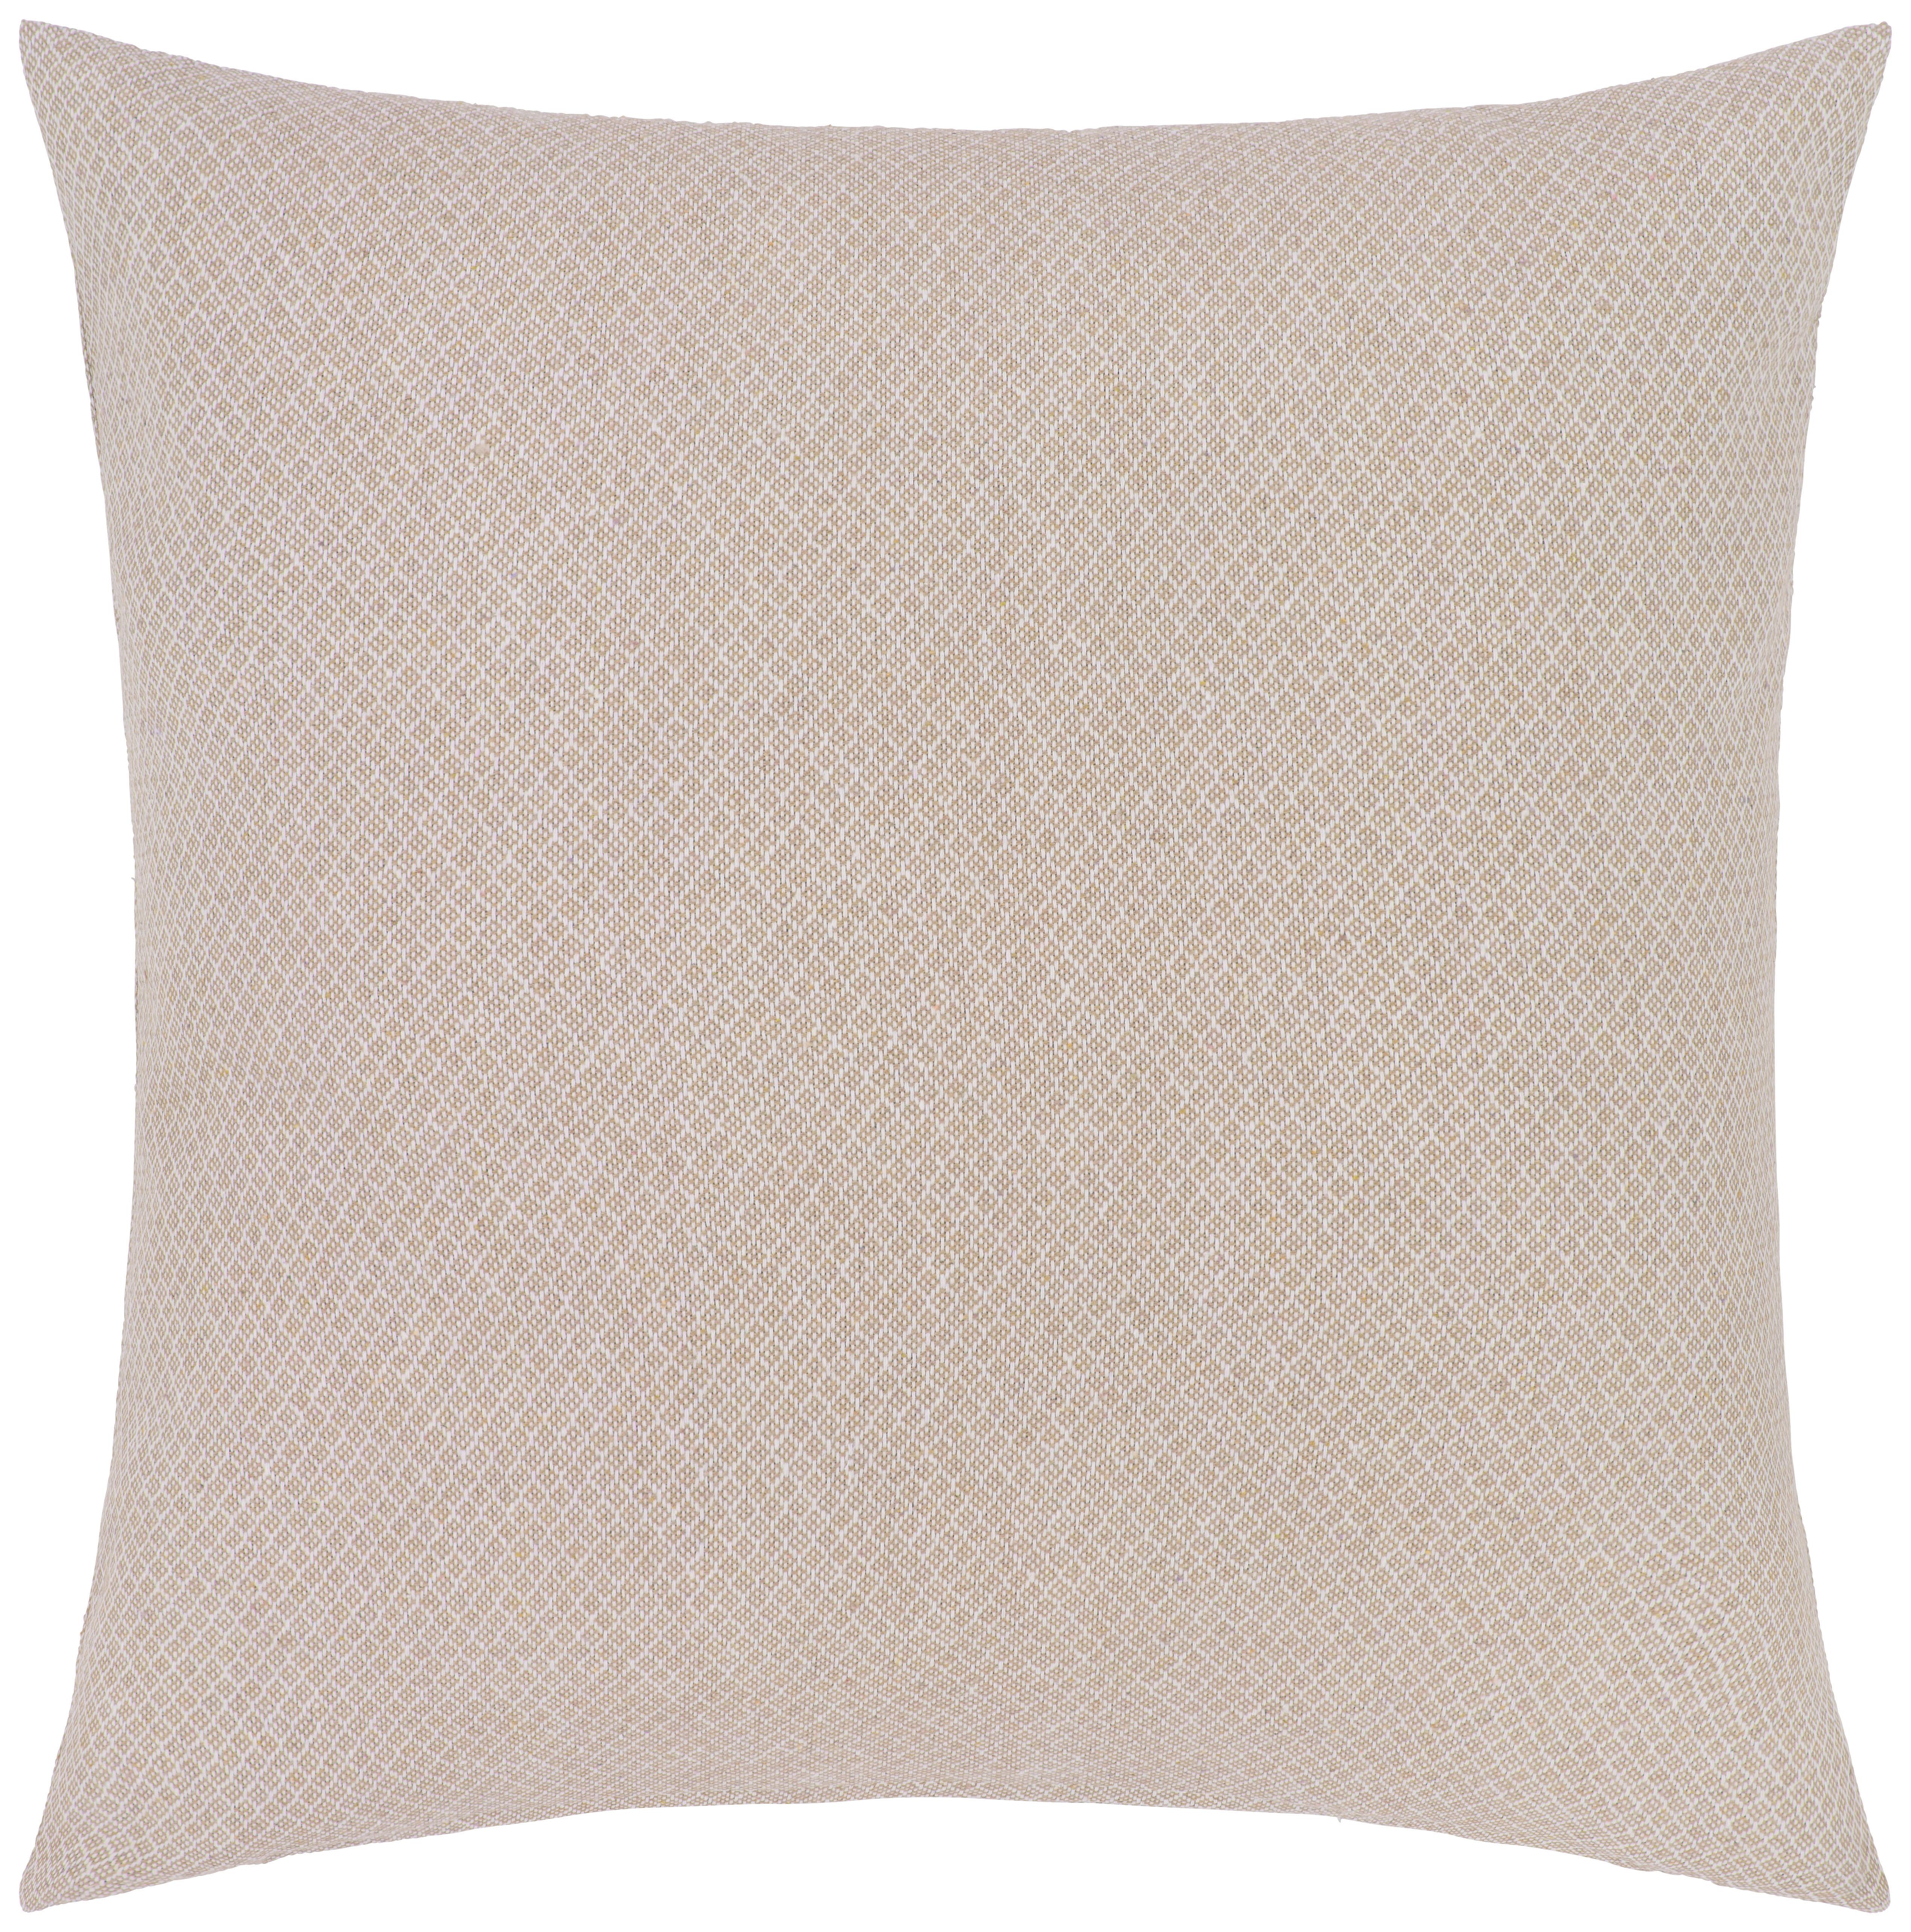 Pernă decorativă Dobby - alb/taupe, Natur, textil (45/45cm) - Premium Living